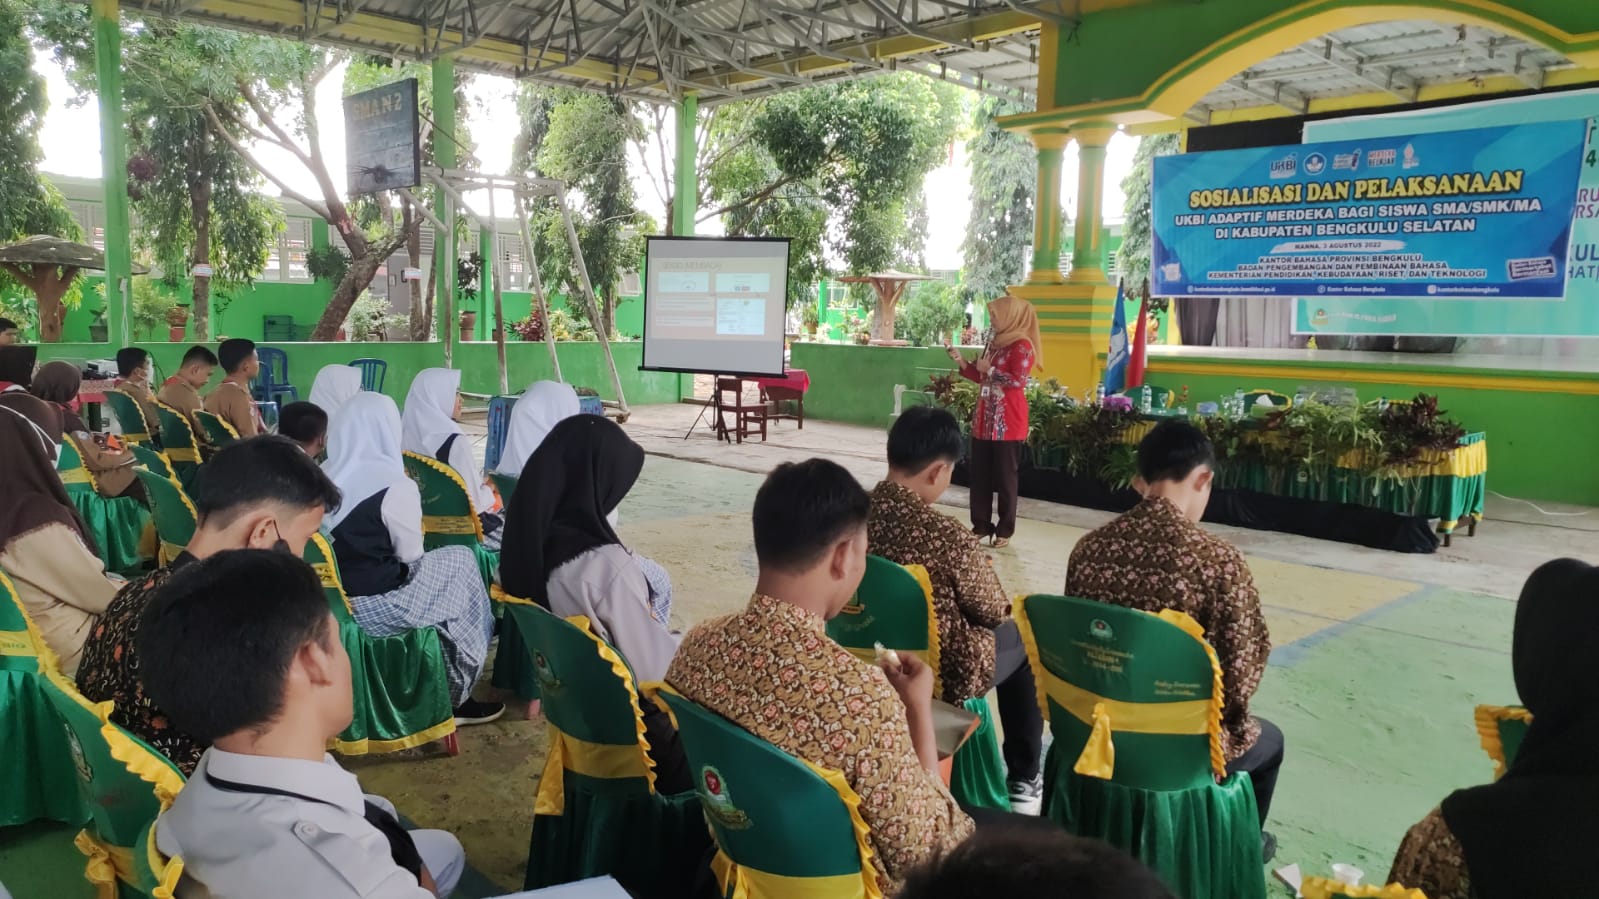 Sosialisasi dan Pelaksanaan UKBI Adaptif Merdeka bagi Siswa SMA/MA/SMK di Kabupaten Bengkulu Selatan